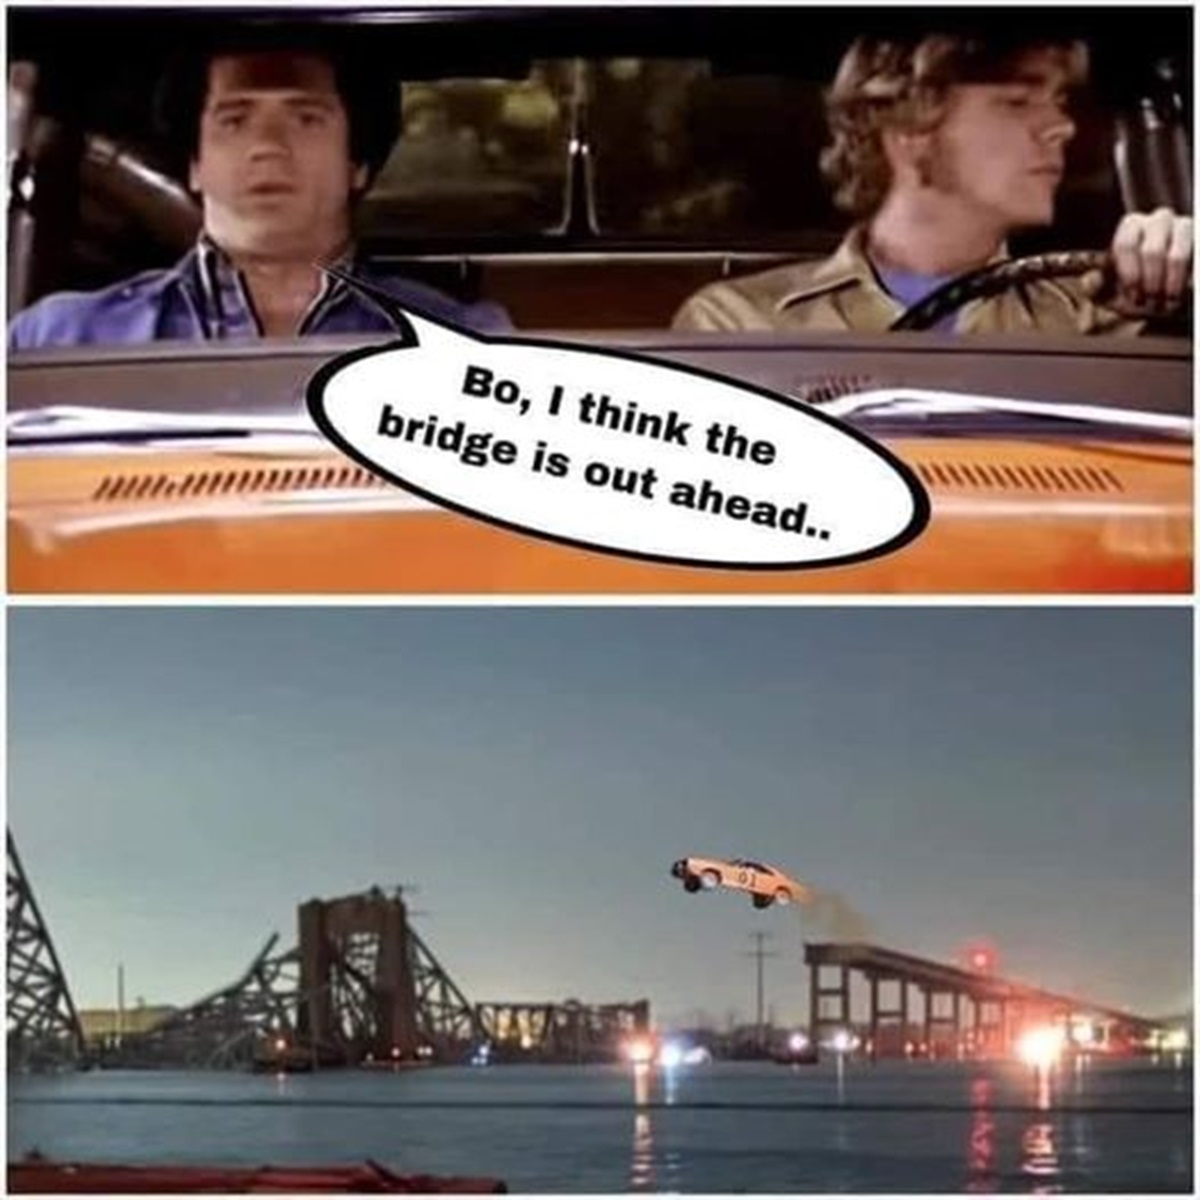 photo caption - Bo, I think the bridge is out ahead..